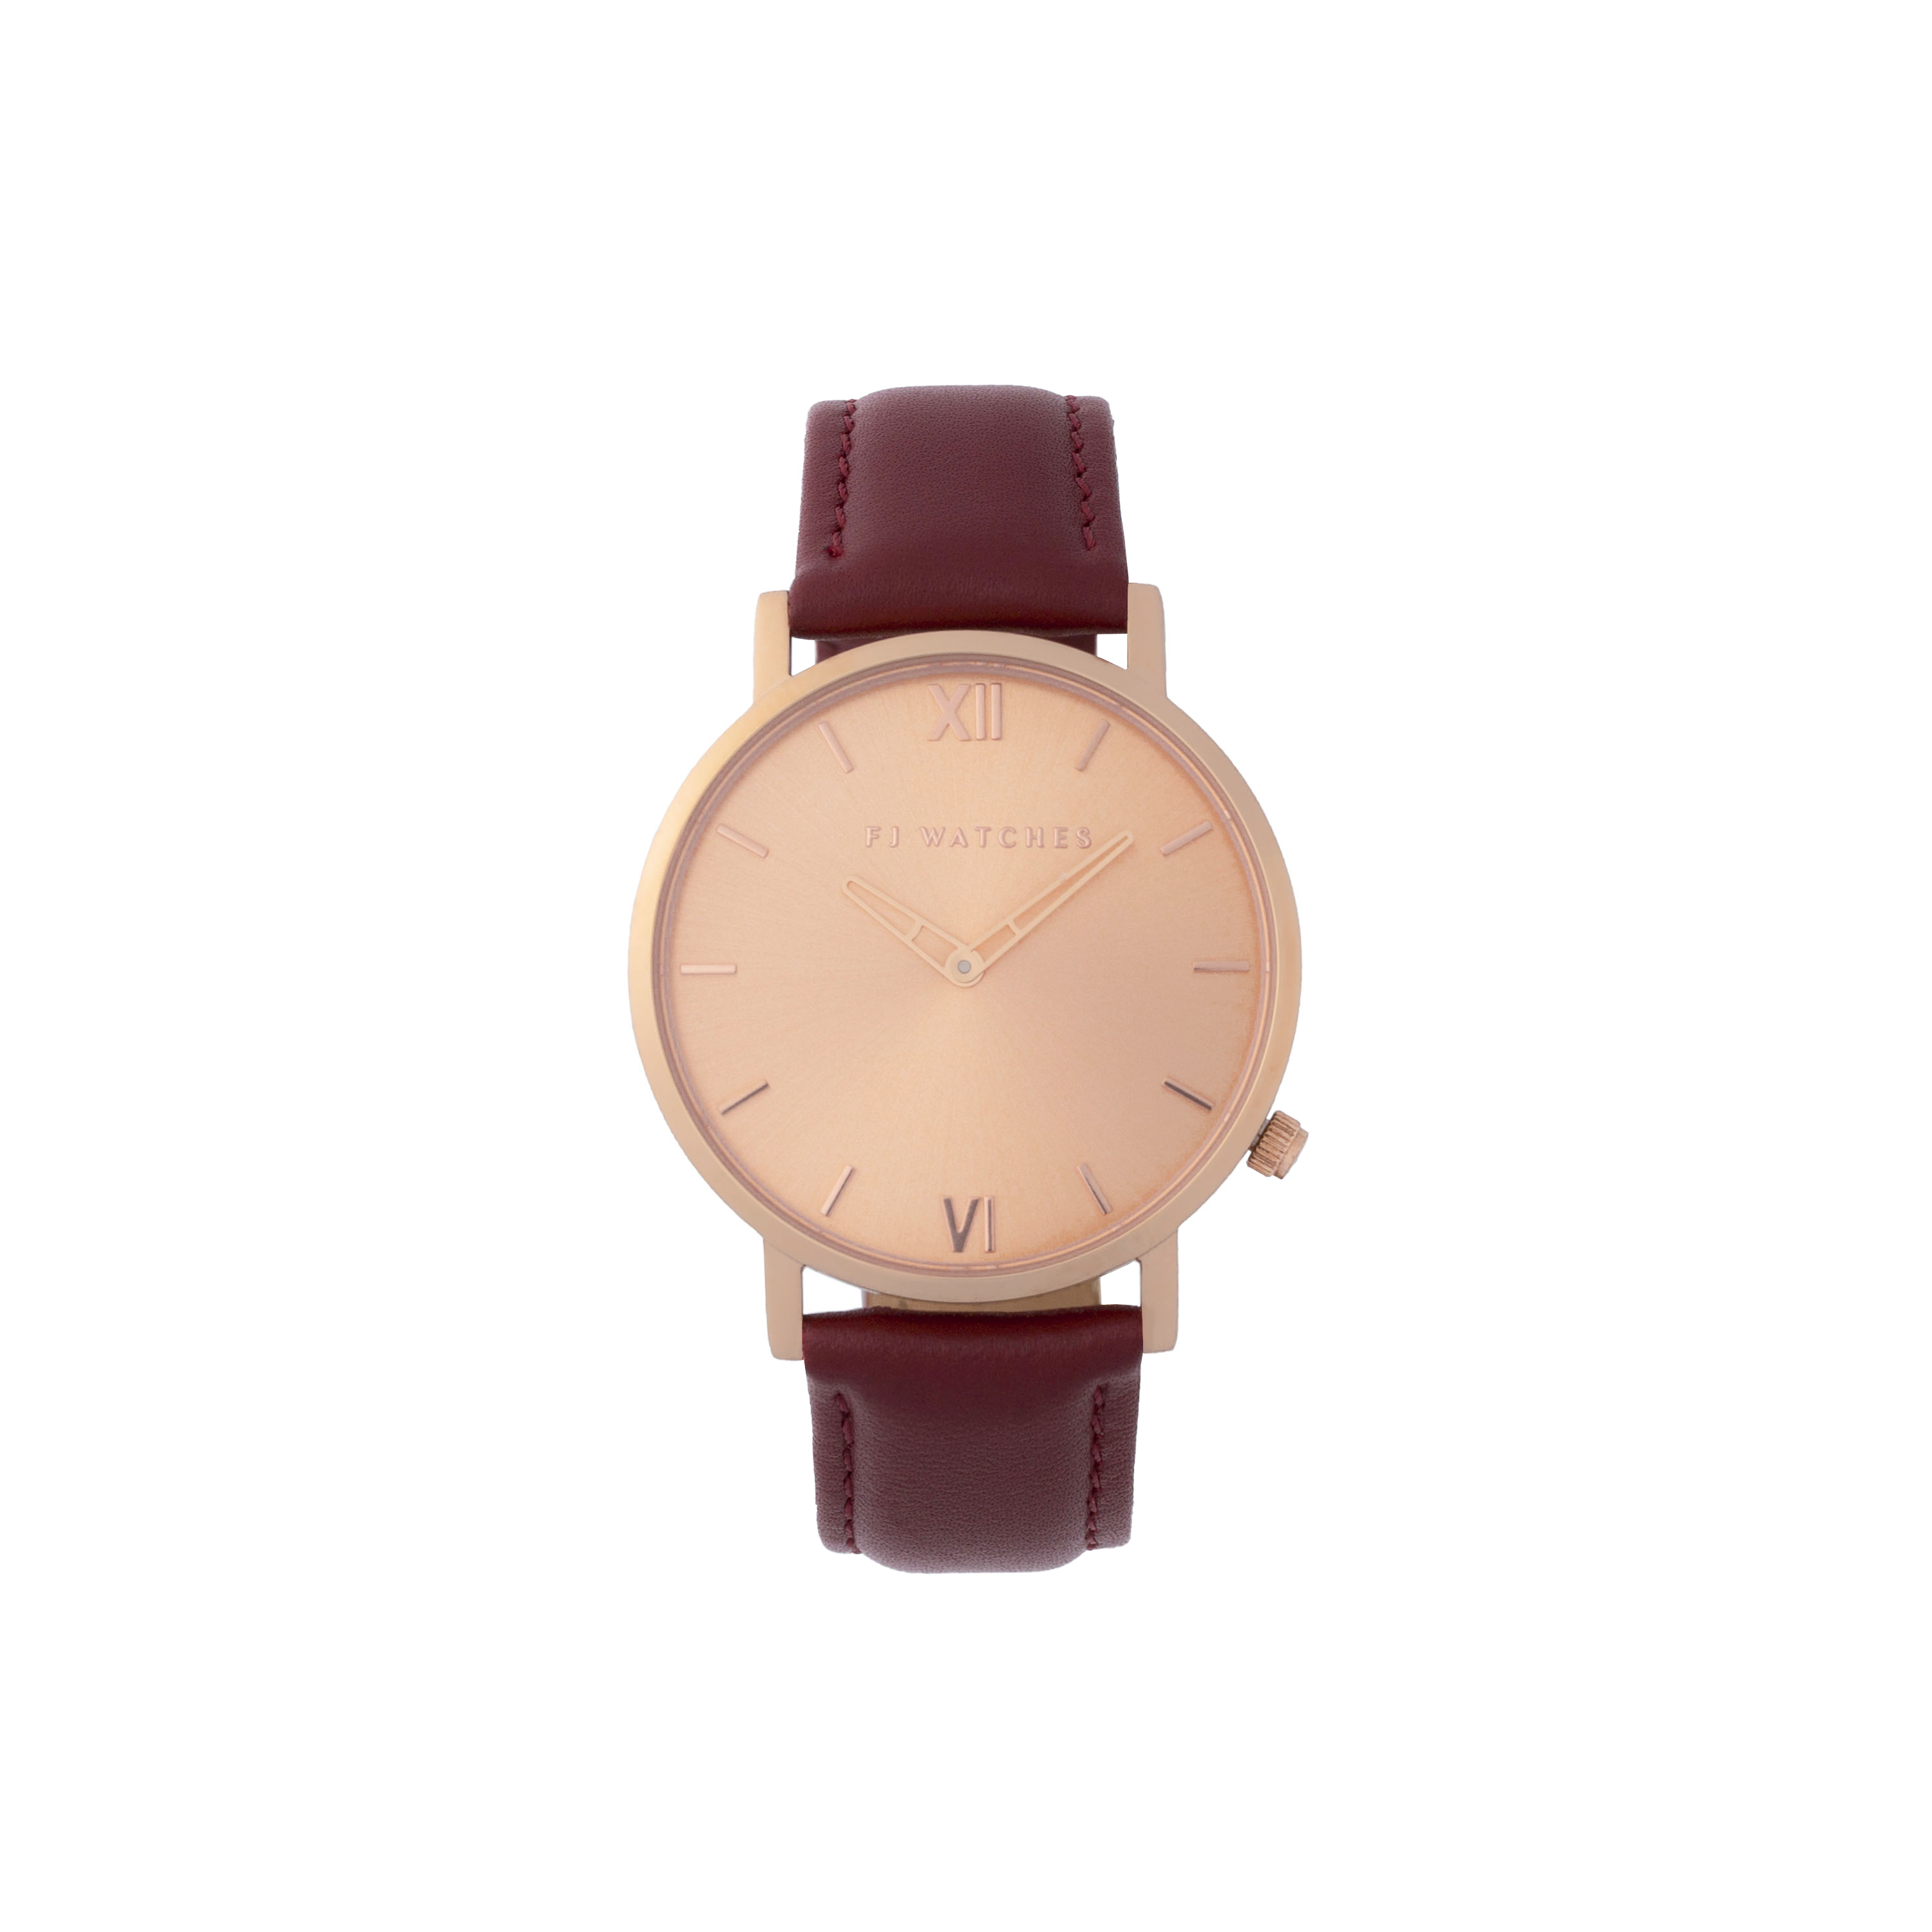 FJ Watches sunset rose gold rosegold watch women 36mm red burgundy leather strap minimalist